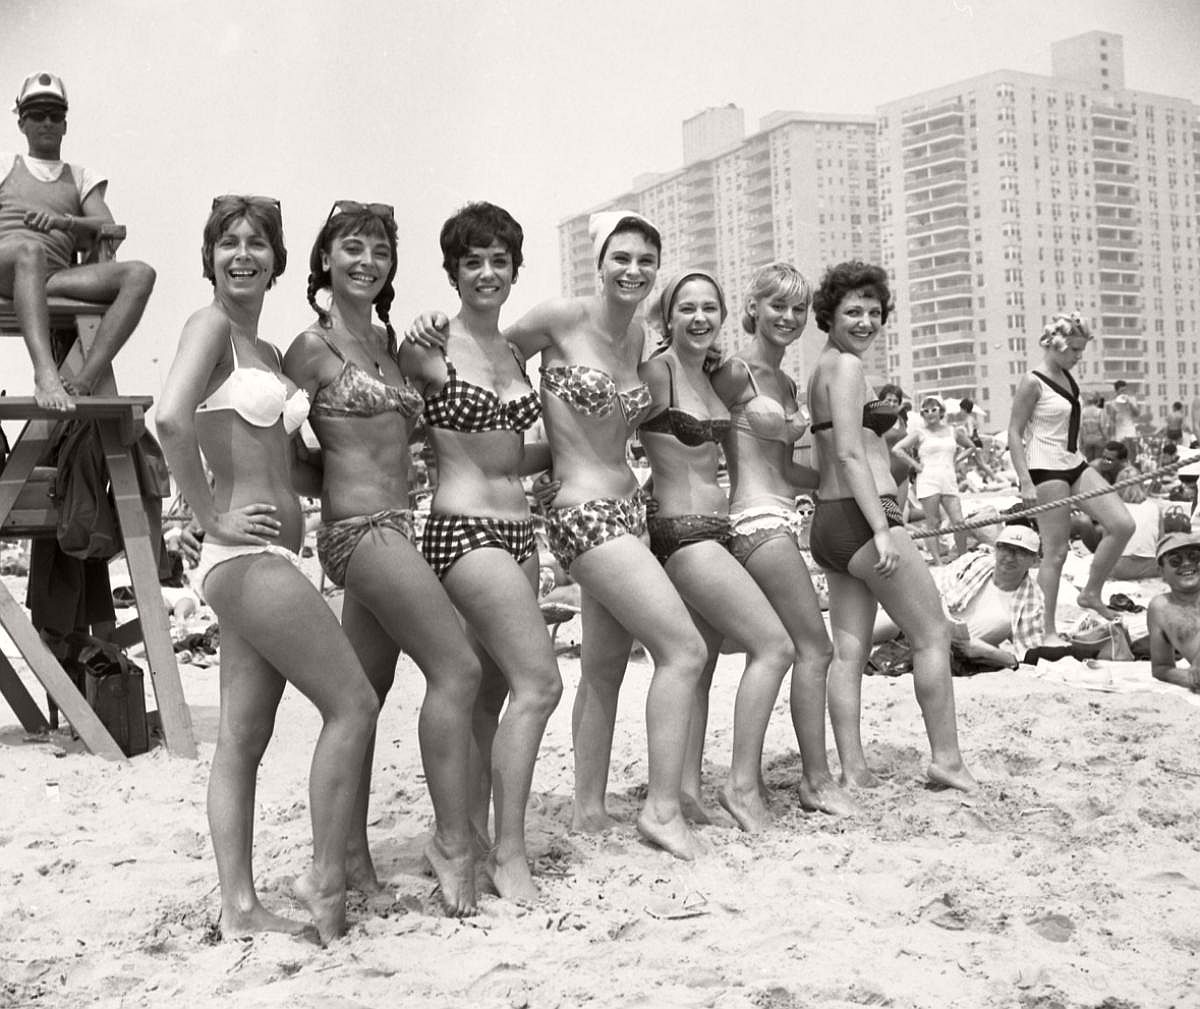 https://www.boweryboyshistory.com/wp-content/uploads/2017/02/vintage-girls-in-swimsuits-new-york-city-1950s-1960s-08.jpg